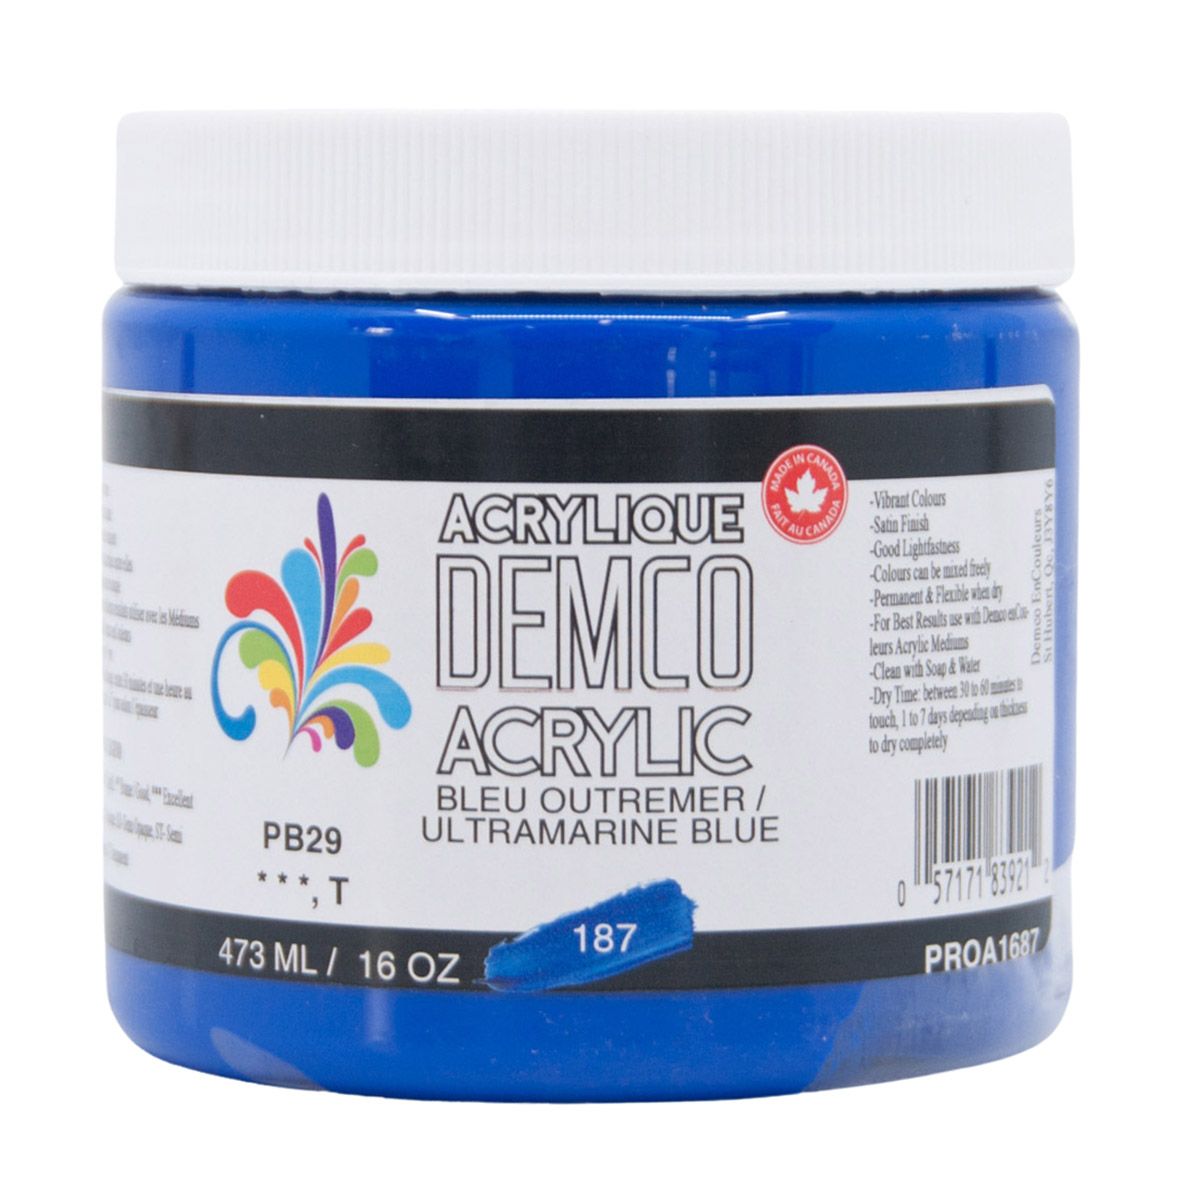 Demco Acrylic Ultramarine Blue 473ml/16oz